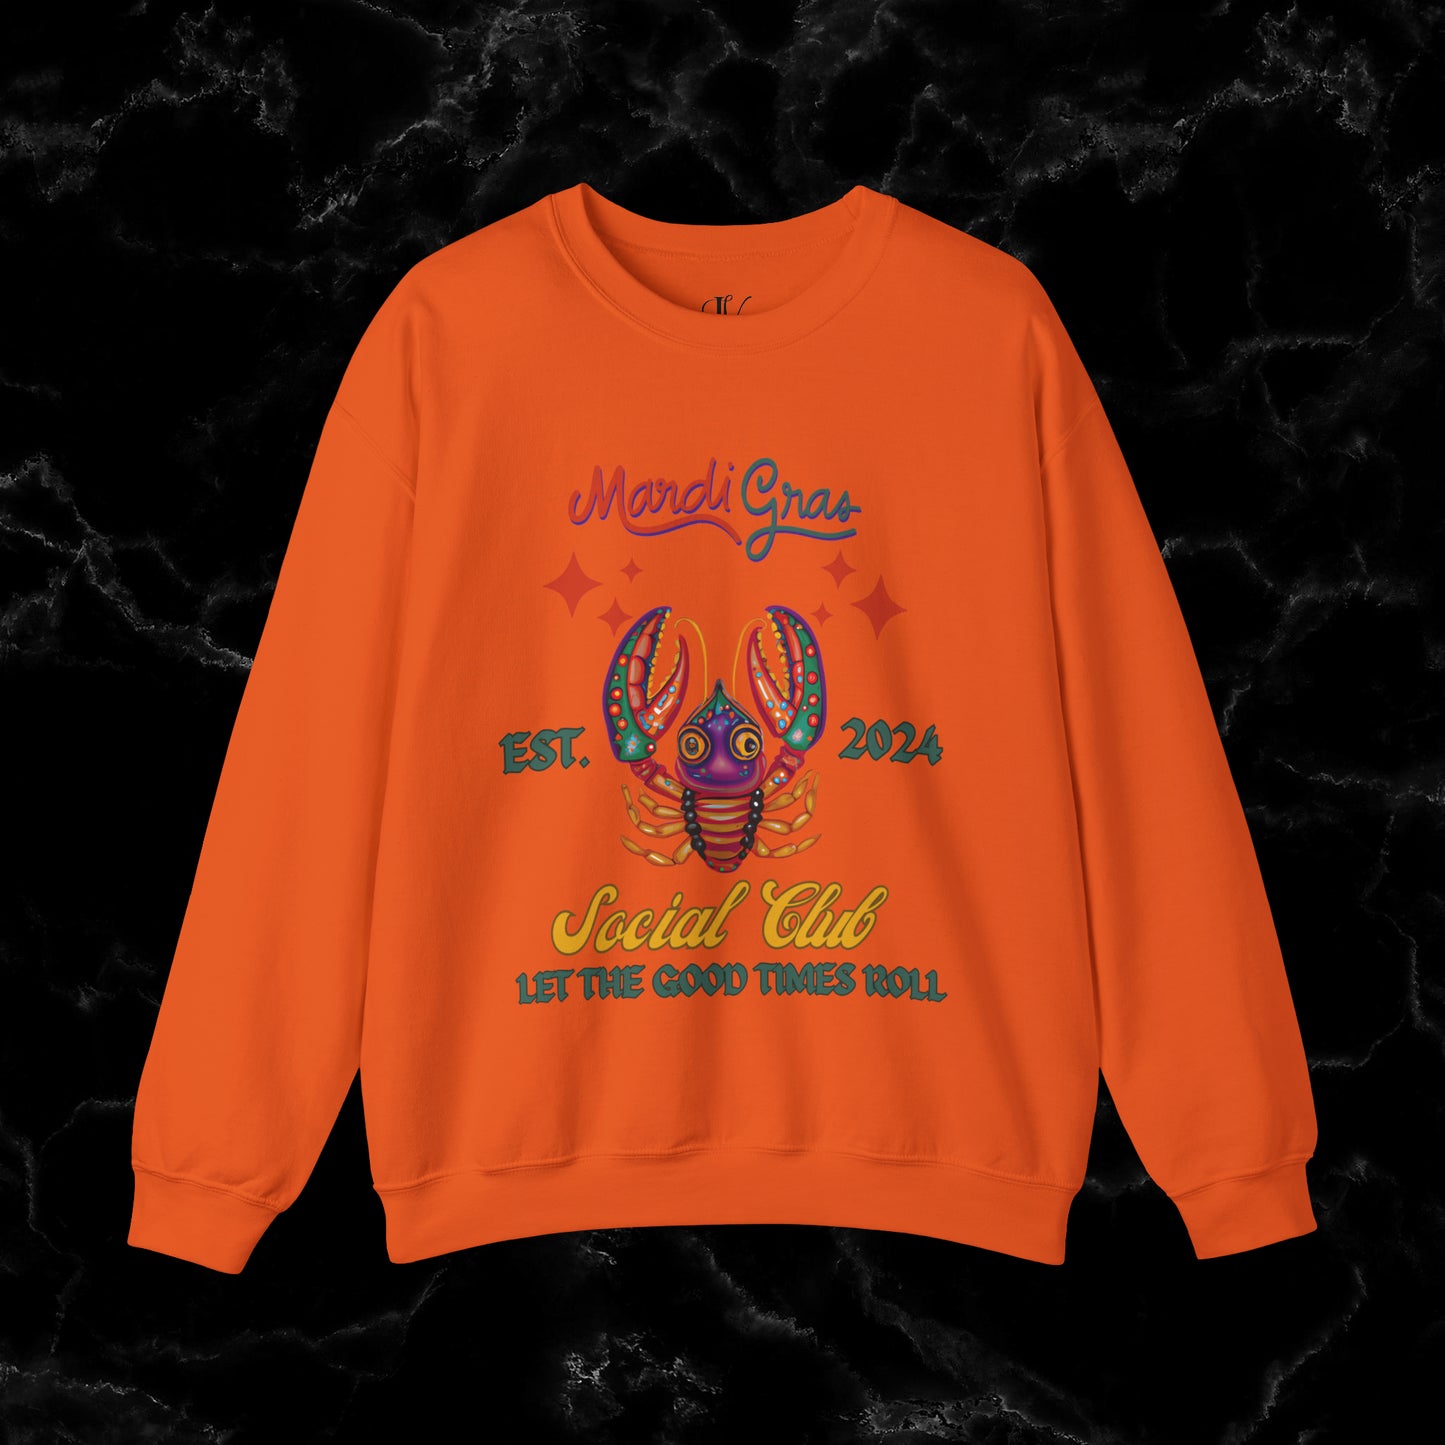 Mardi Gras Sweatshirt Women - NOLA Luxury Bachelorette Sweater, Unique Fat Tuesday Shirt, Louisiana Girls Trip Sweater, Mardi Gras Social Club Style Sweatshirt S Orange 